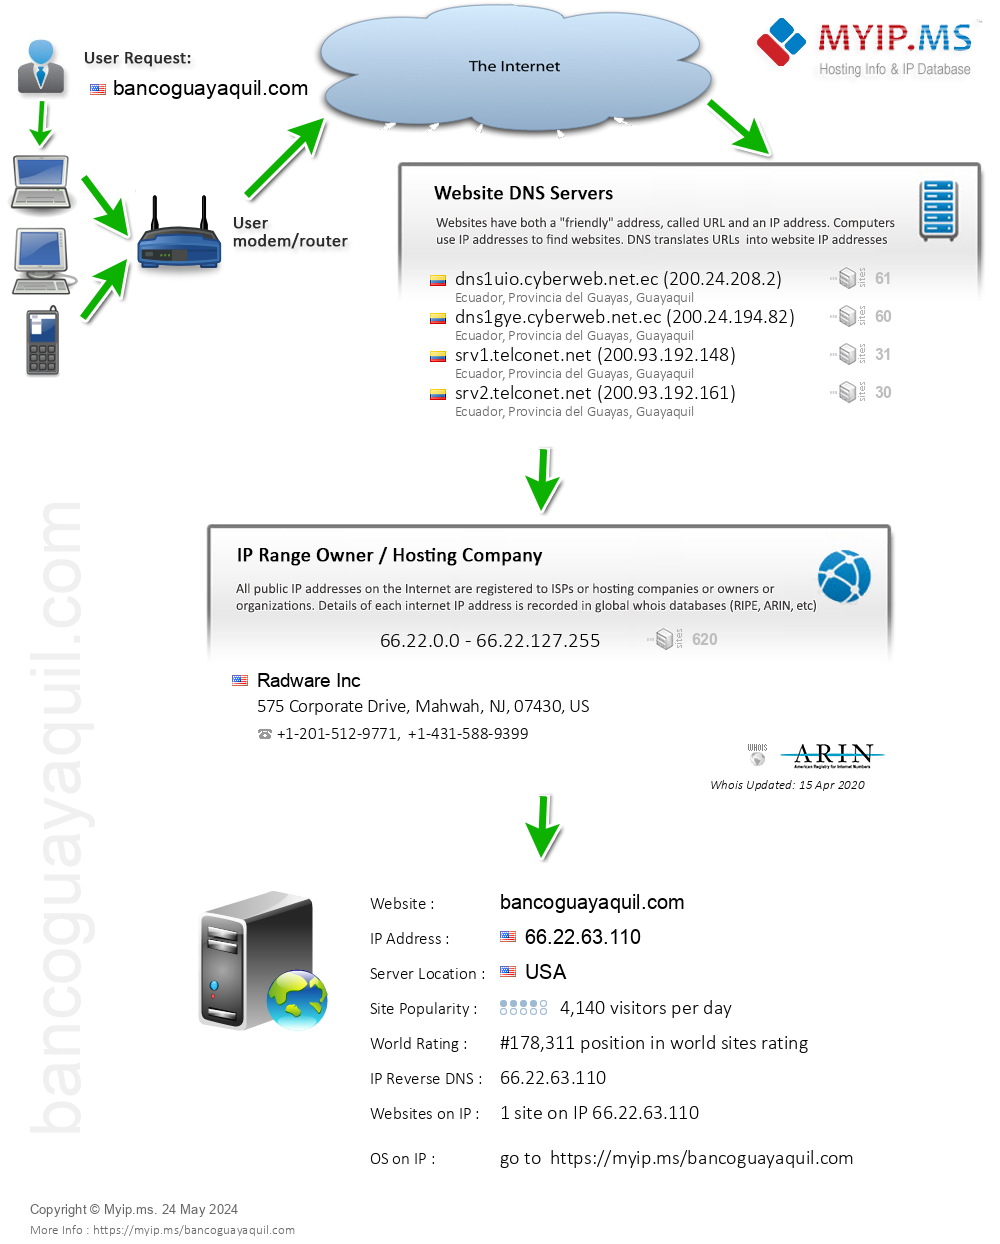 Bancoguayaquil.com - Website Hosting Visual IP Diagram